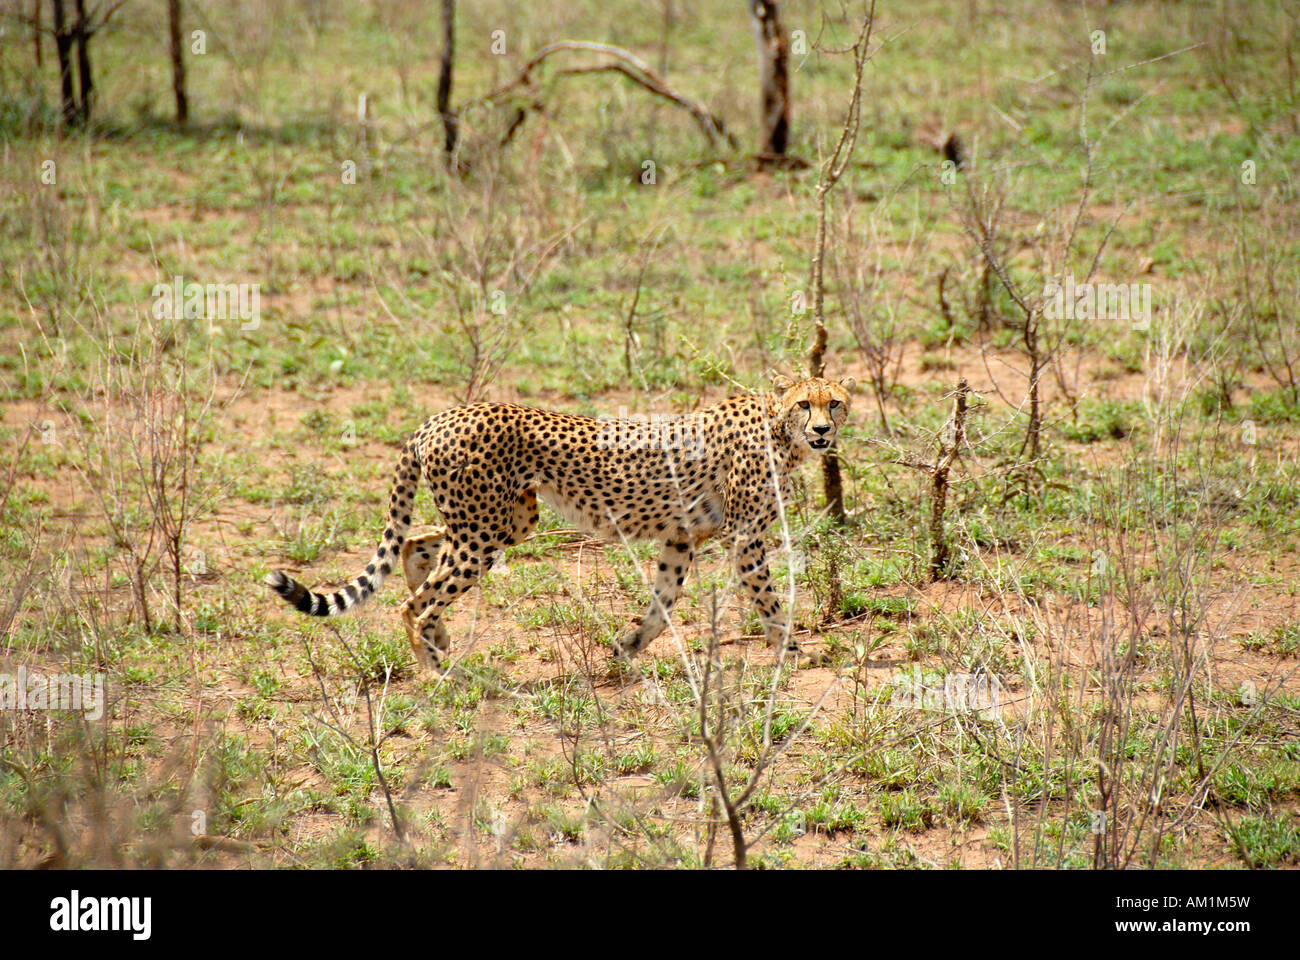 Cheetah (Acinonyx jubatus) at still hunt Serengeti National Park Tanzania Stock Photo